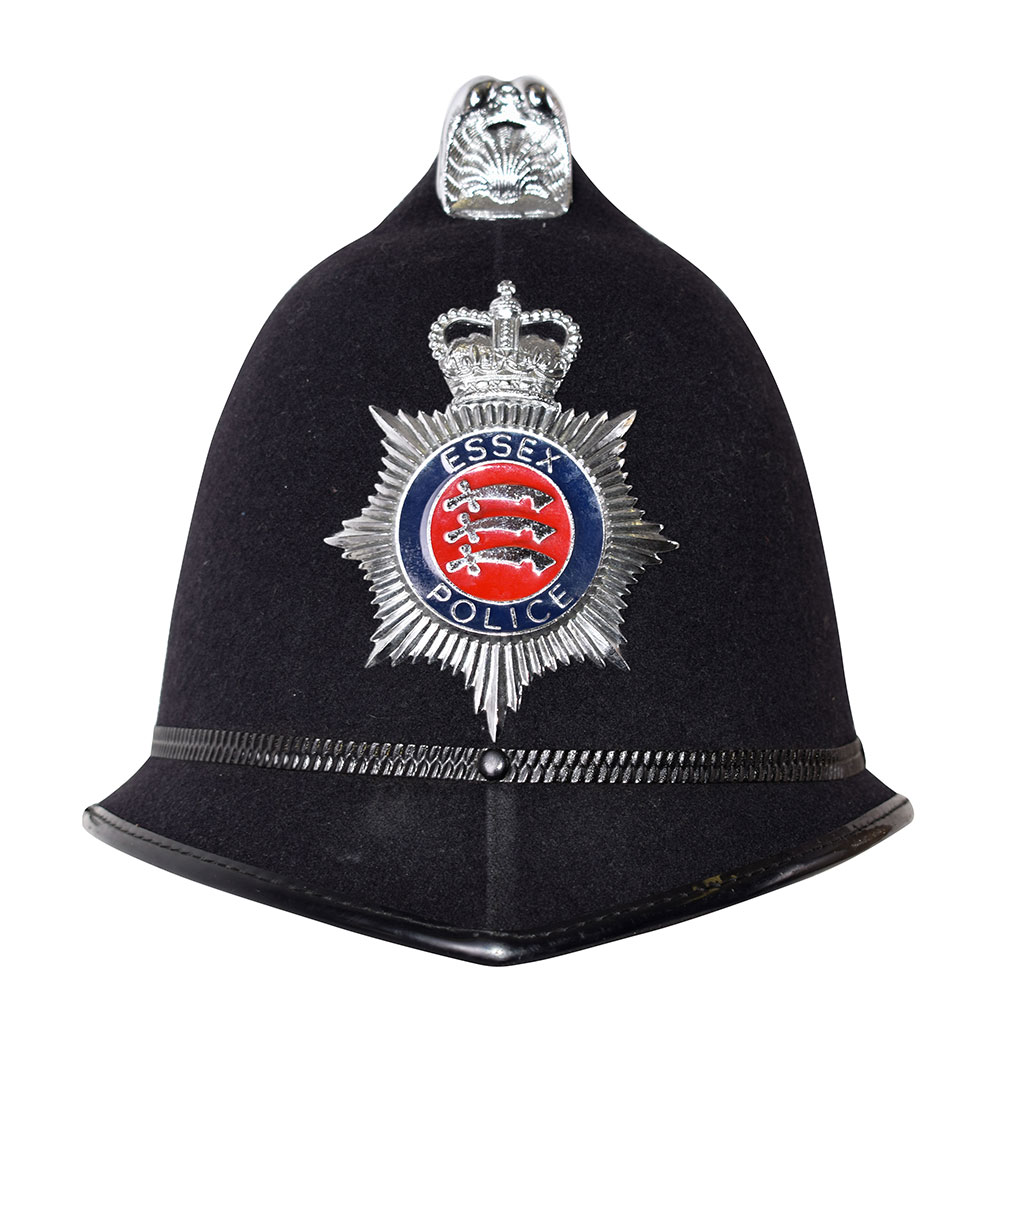 Шлем полицейский ESSEX б/у Англия